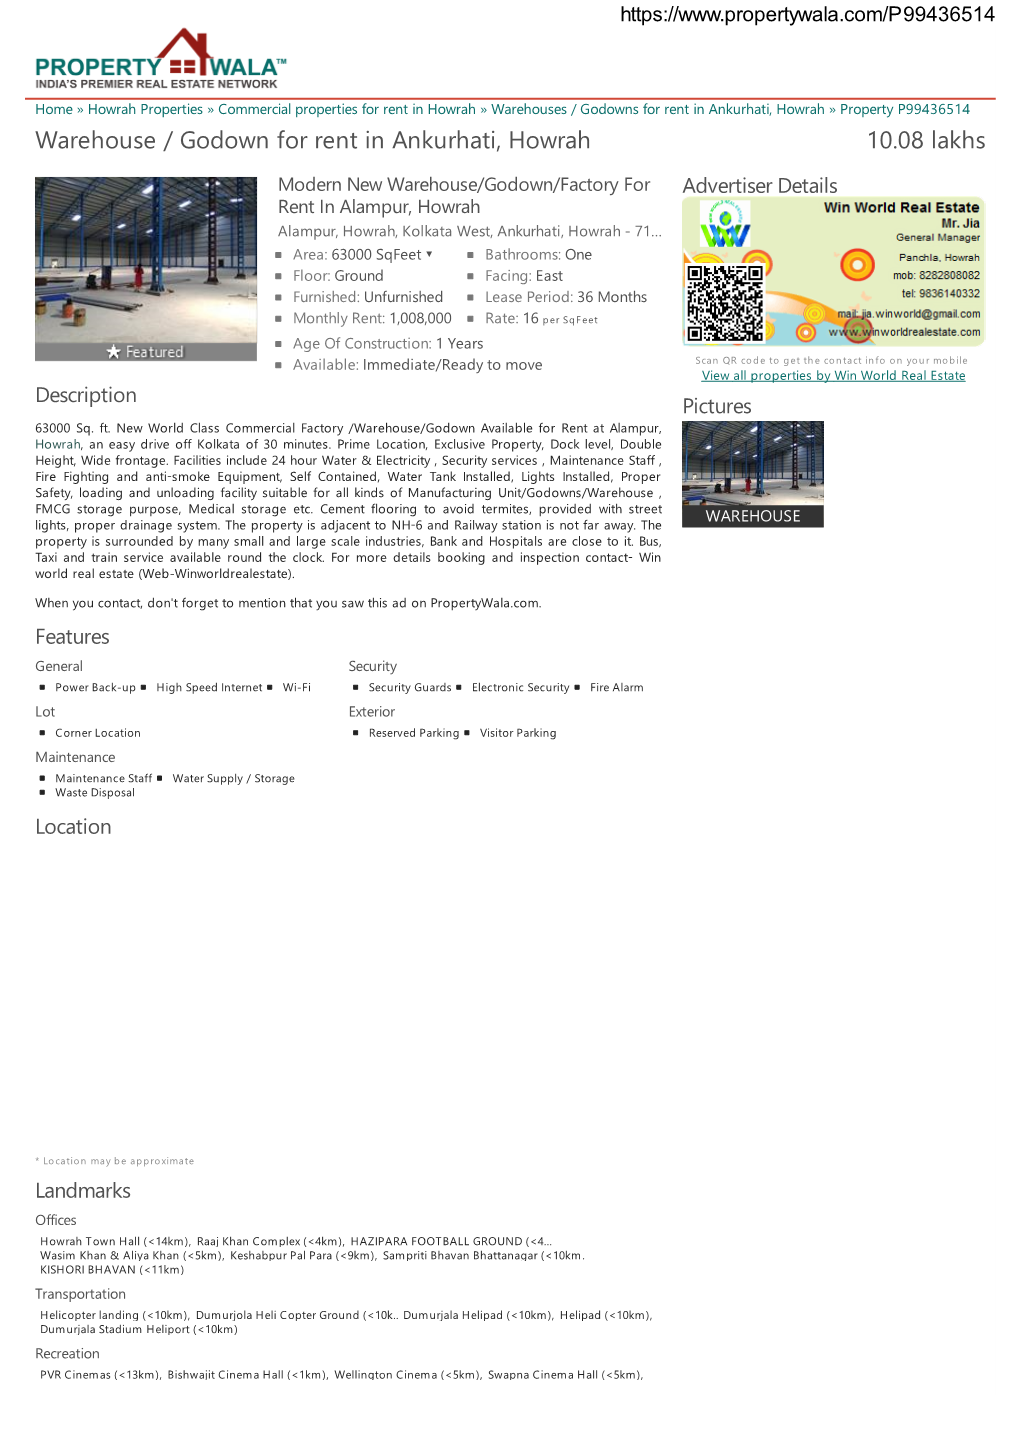 Warehouse / Godown for Rent in Ankurhati, Howrah (P99436514)